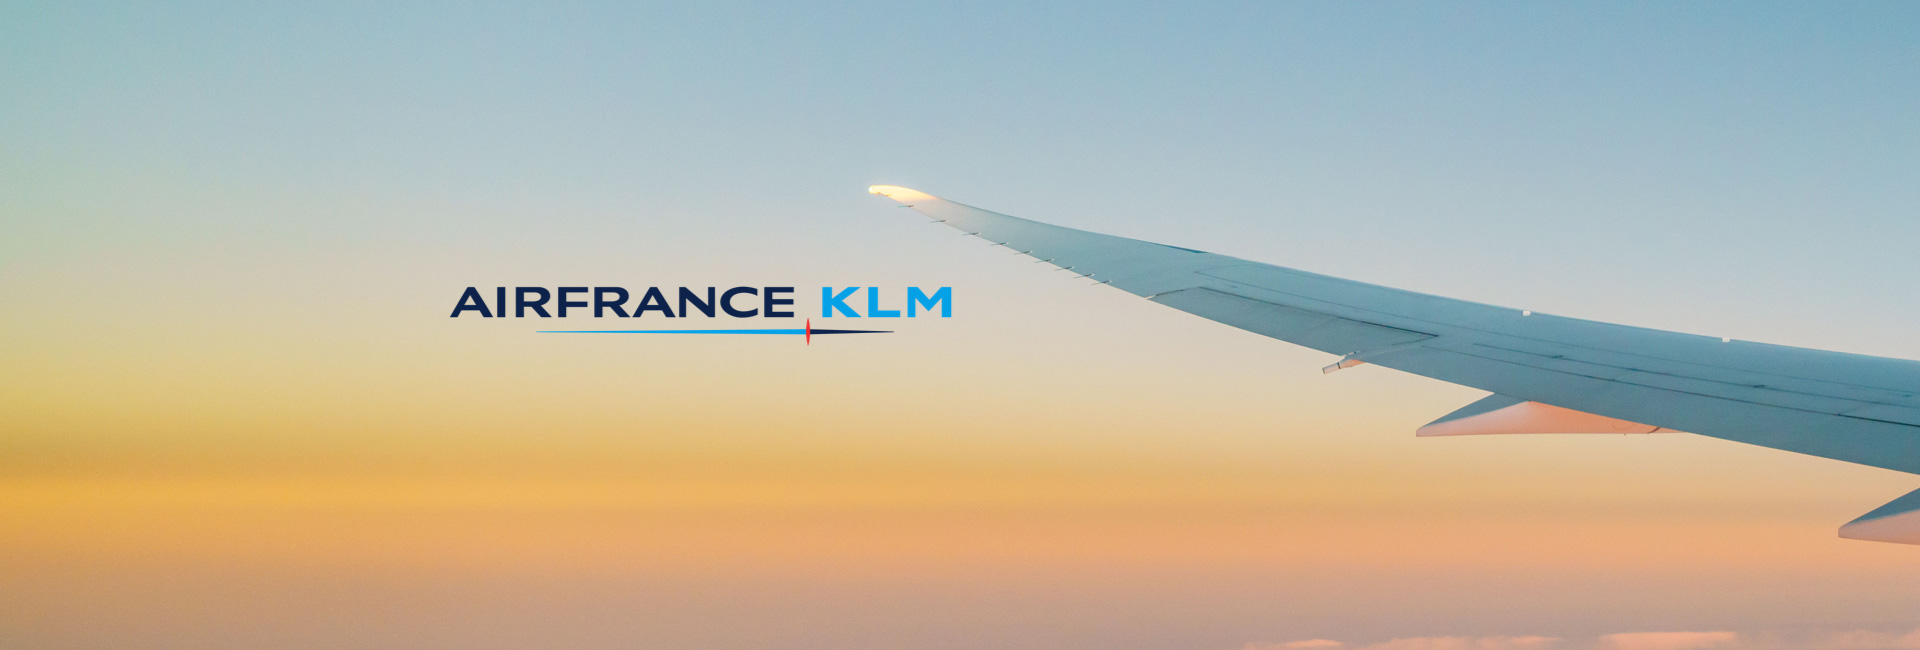 法航 - 荷航(Air France – KLM)